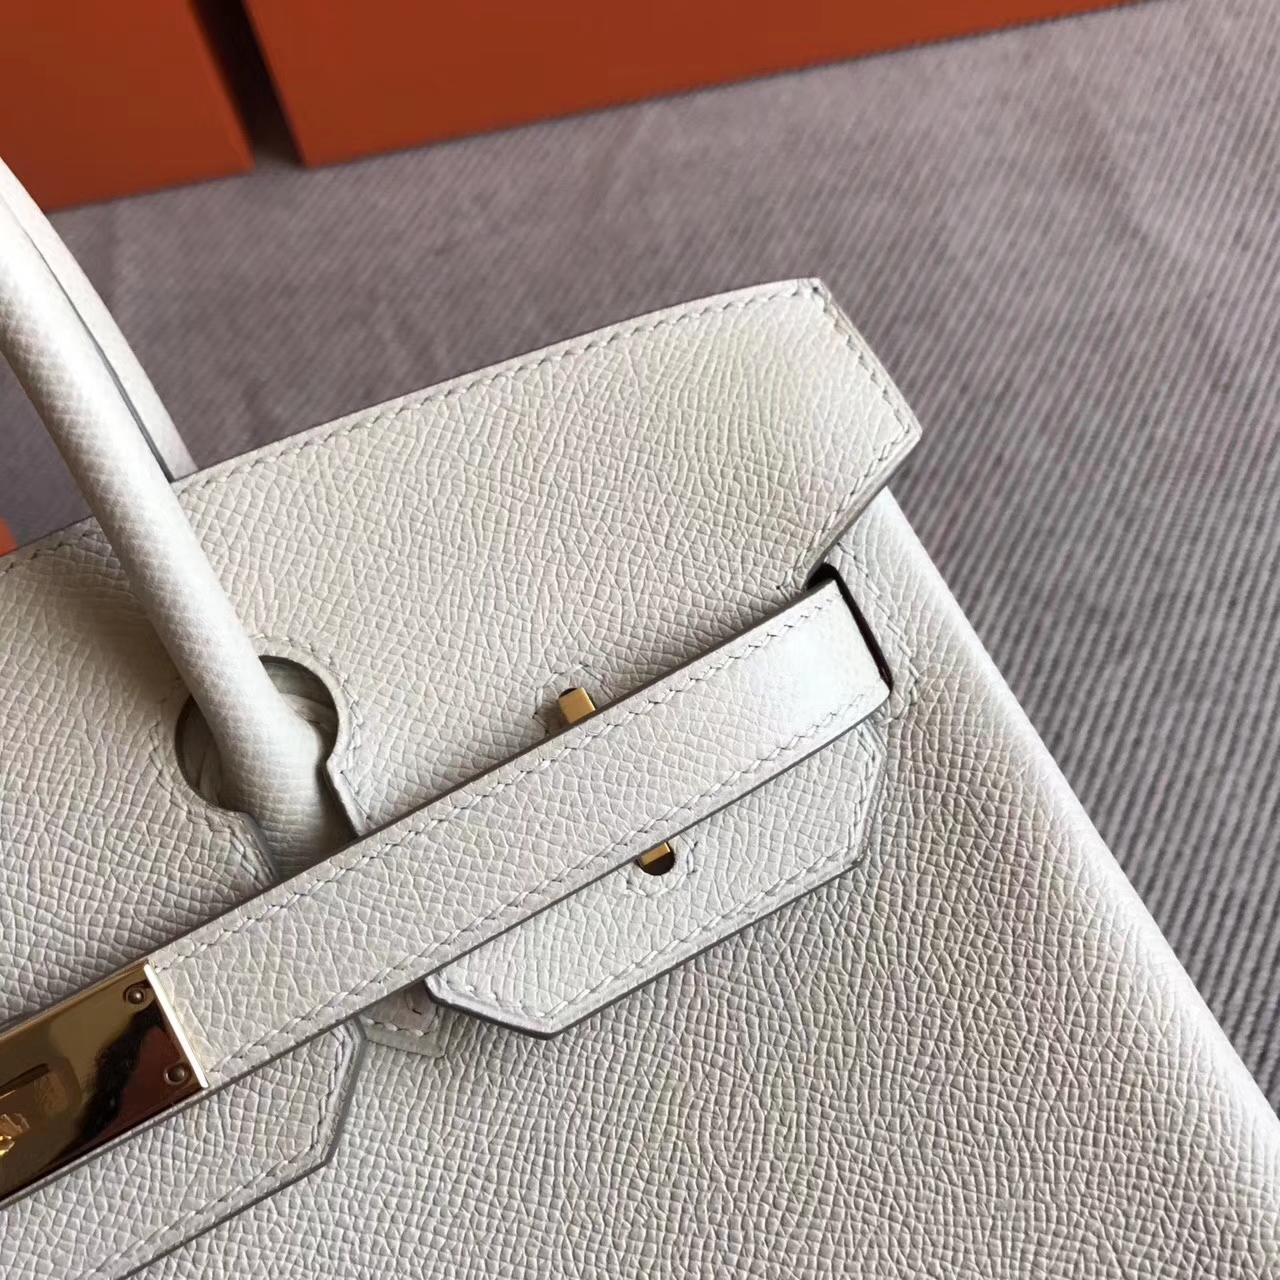 Hot Sale Hermes CK10 Carie White Epsom Leather Birkin30cm Bag